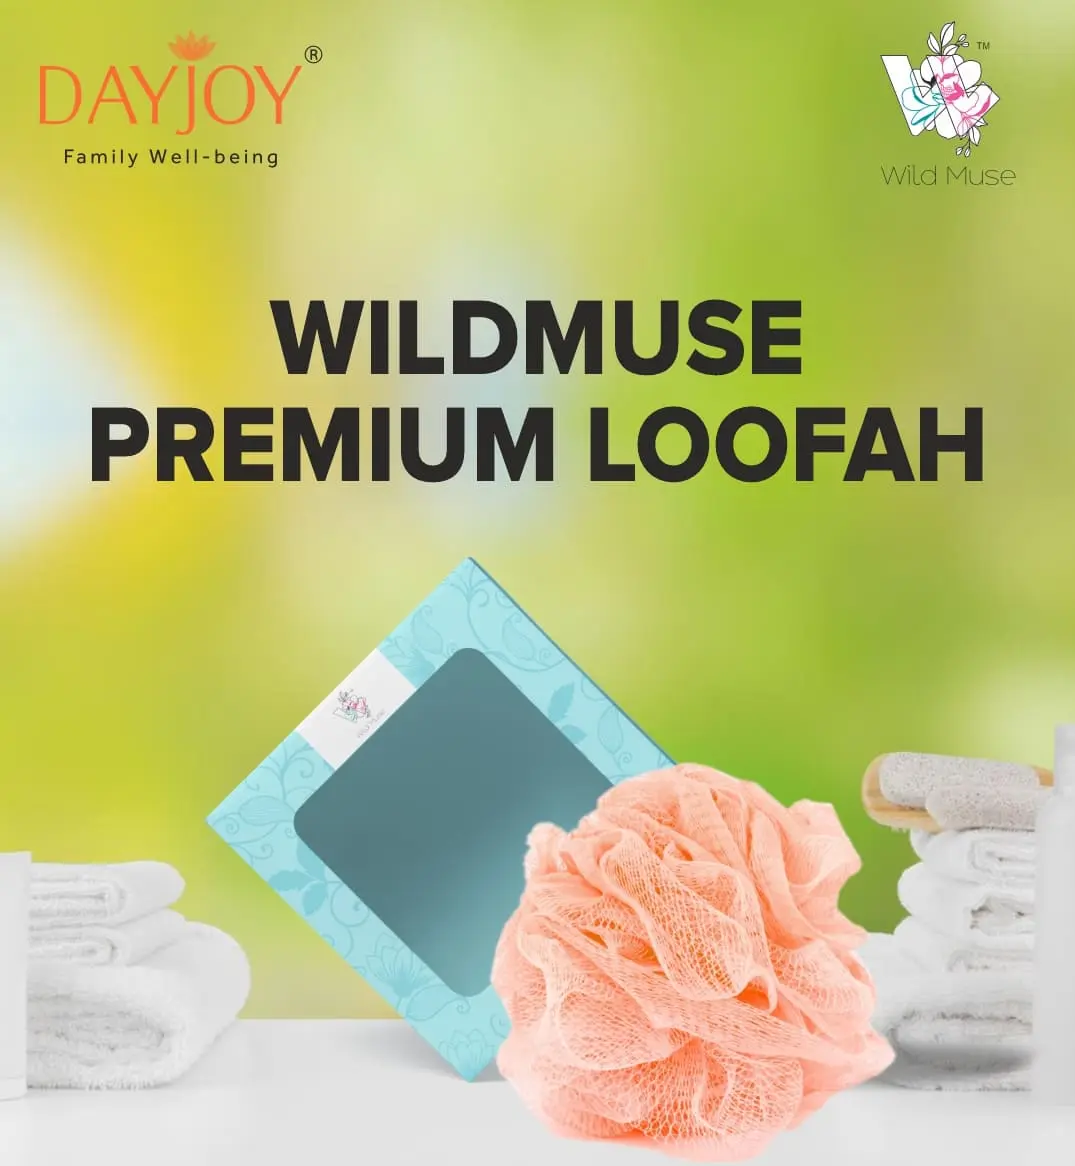 Wild Muse Premium Loofah- an ideal skin friend